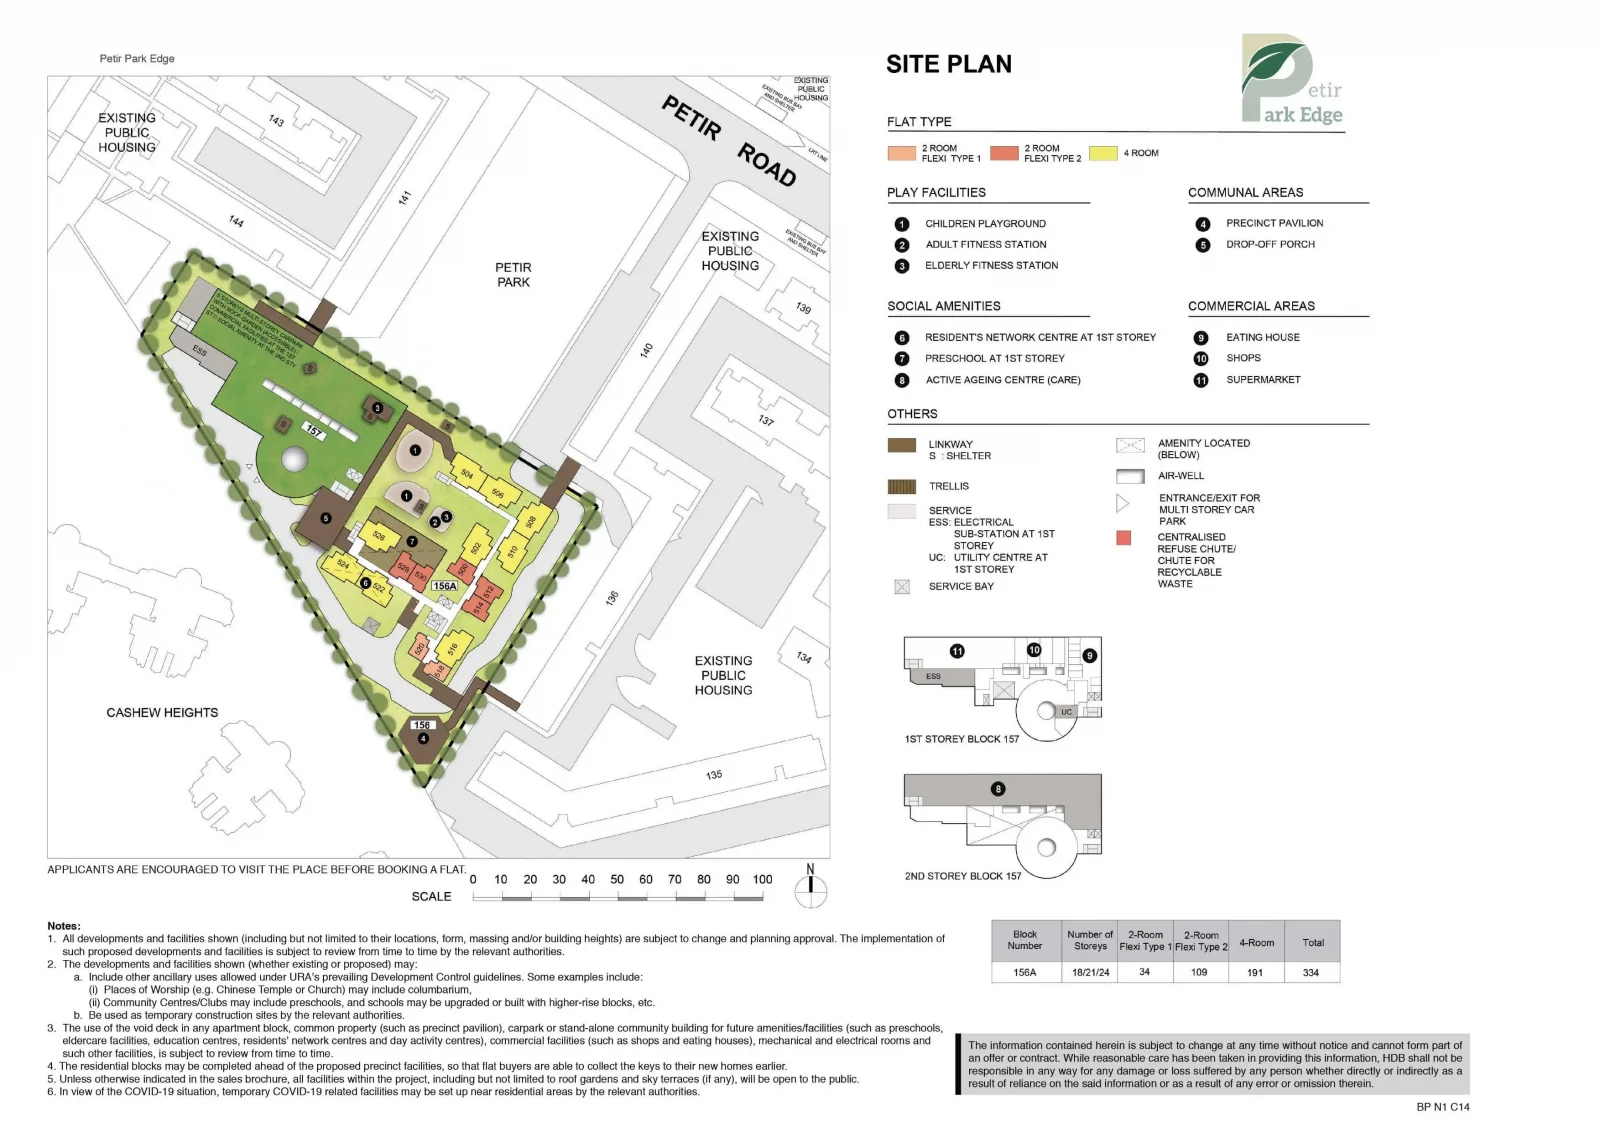 Petir Park Edge Site Plan